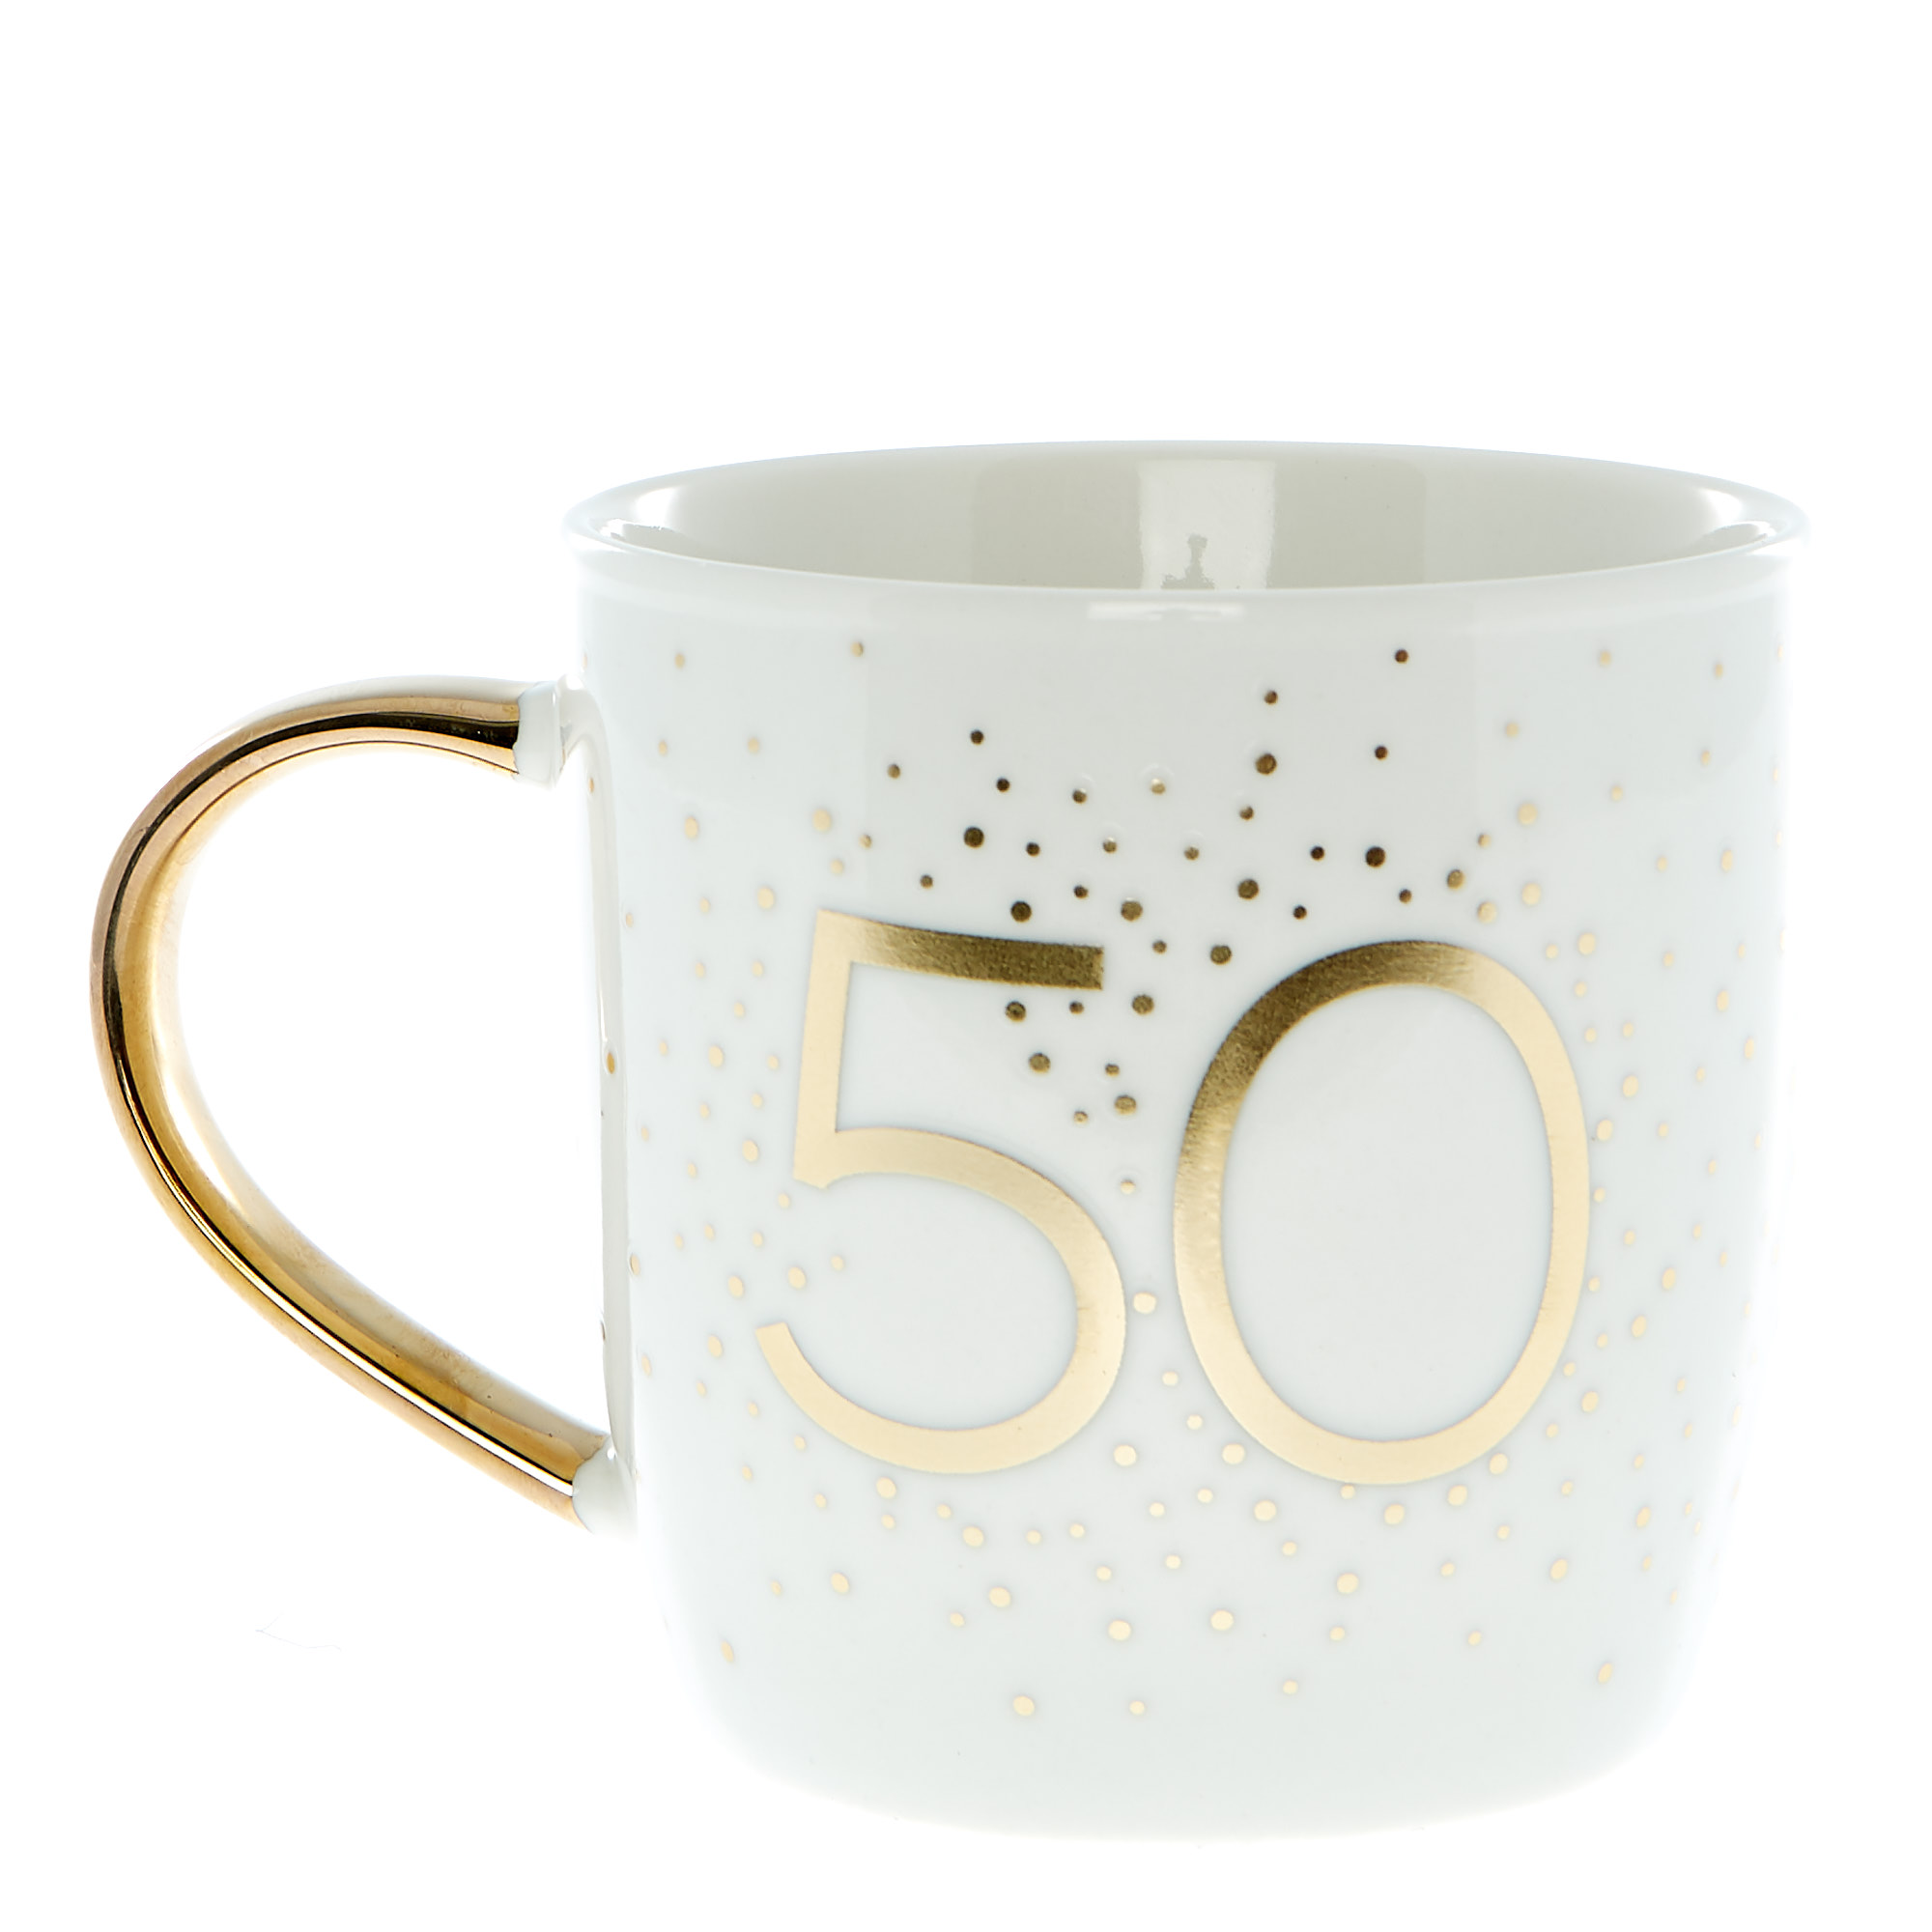 50th Birthday Mug In A Box - Happy Birthday To You